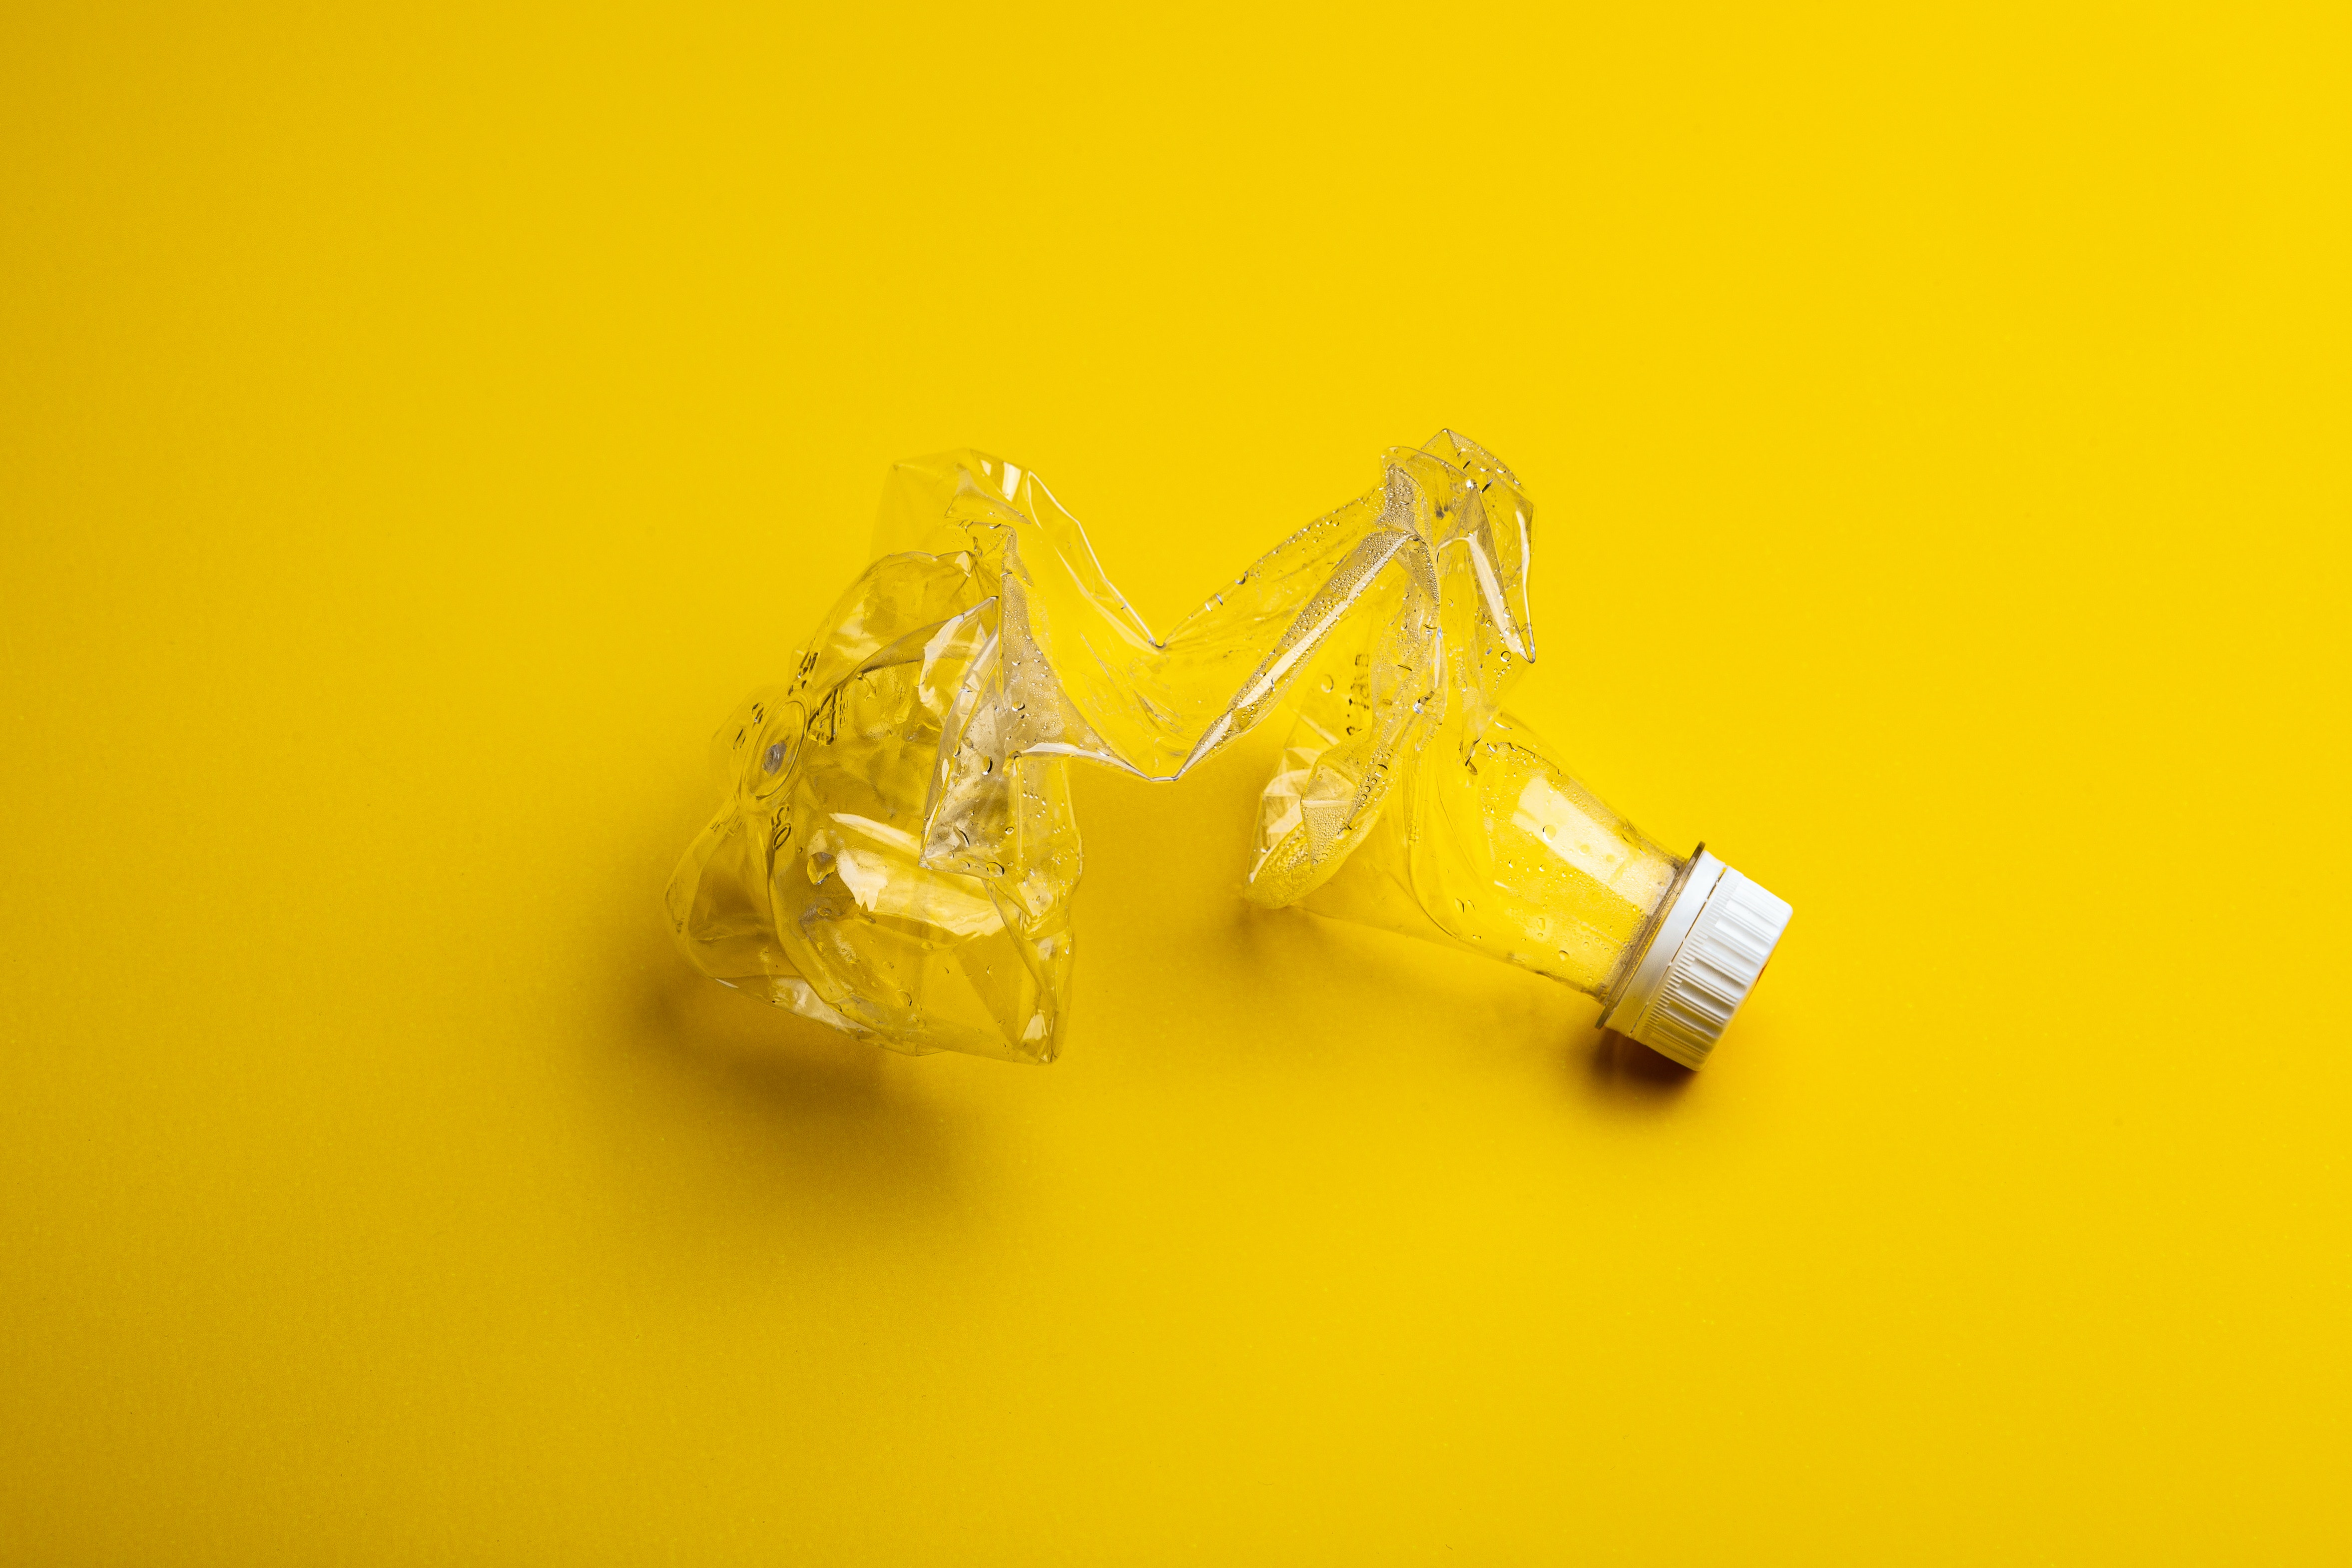 Crushed plastic bottle on yellow background